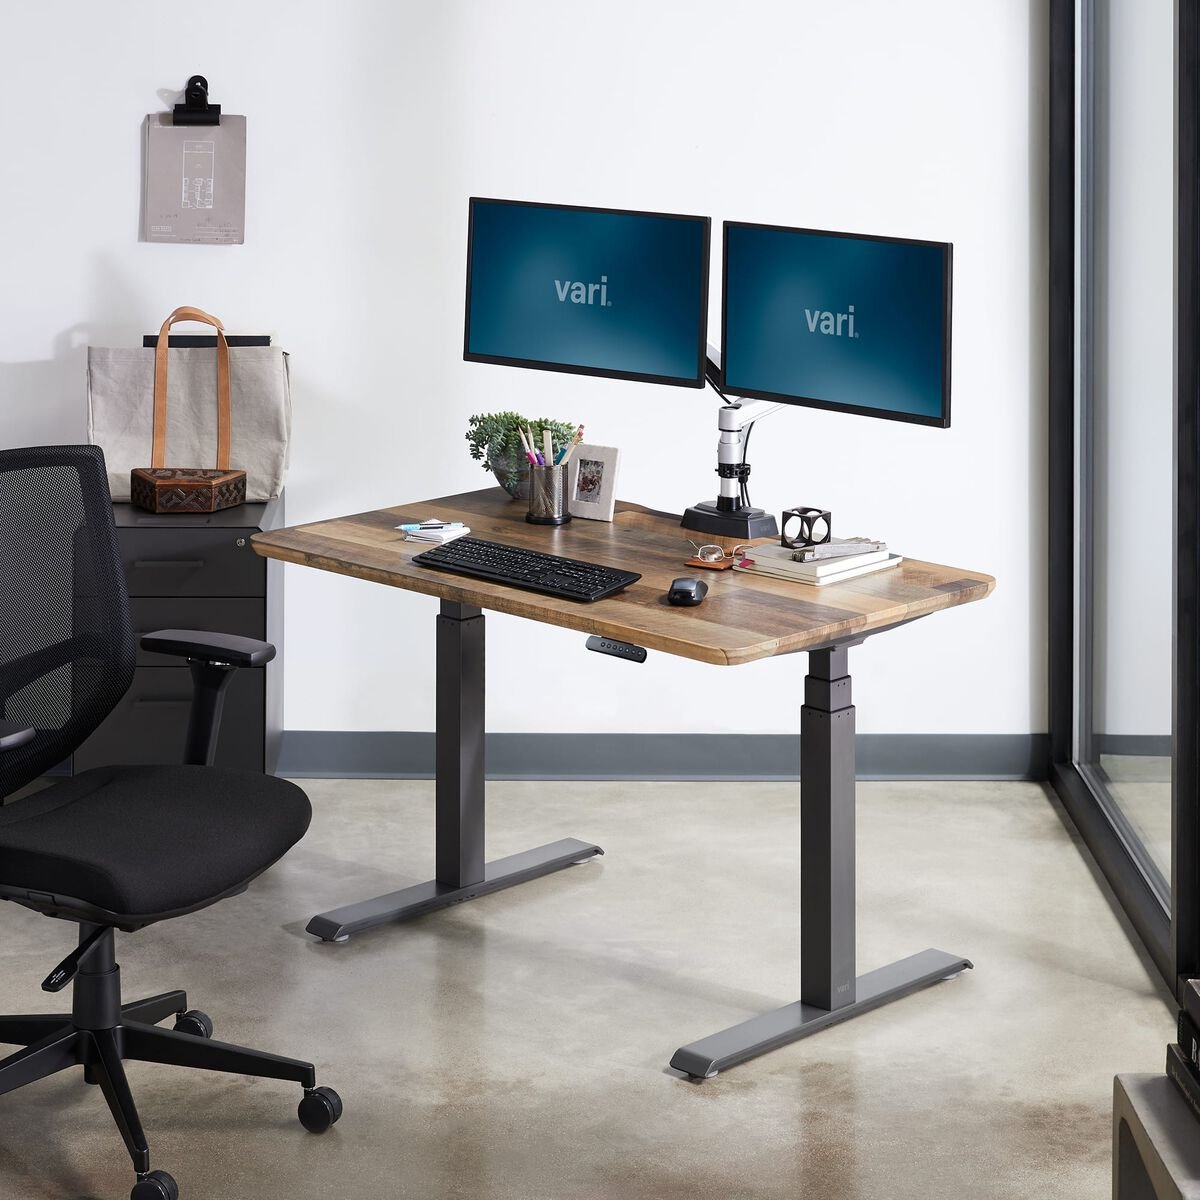 The Best Work-From-Home Gift Ideas of 2020: Sleek Standing Desks